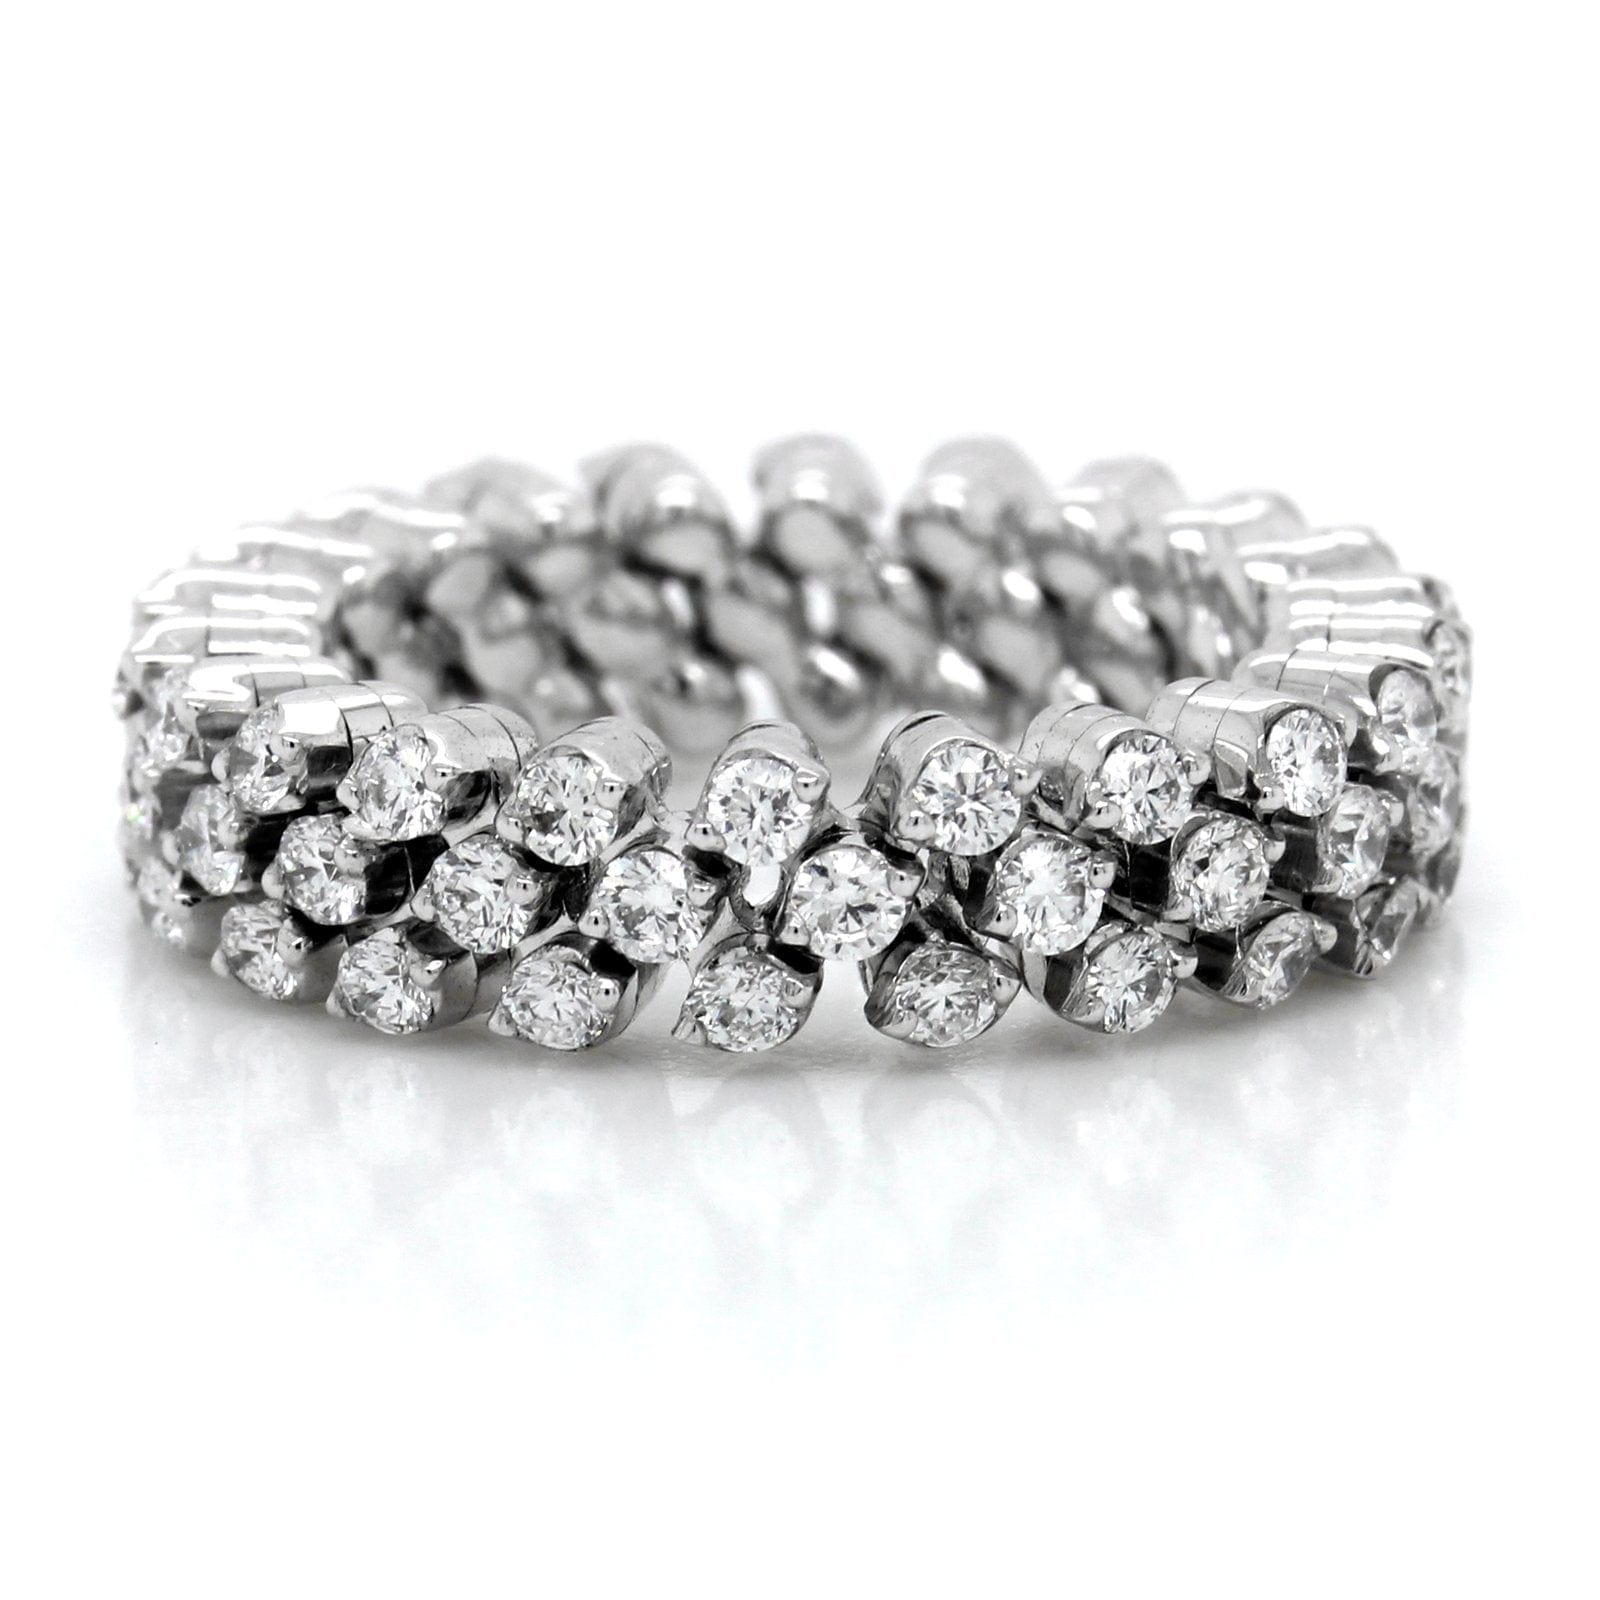 18K White Gold Three-Row Adjacent Diamond Ring